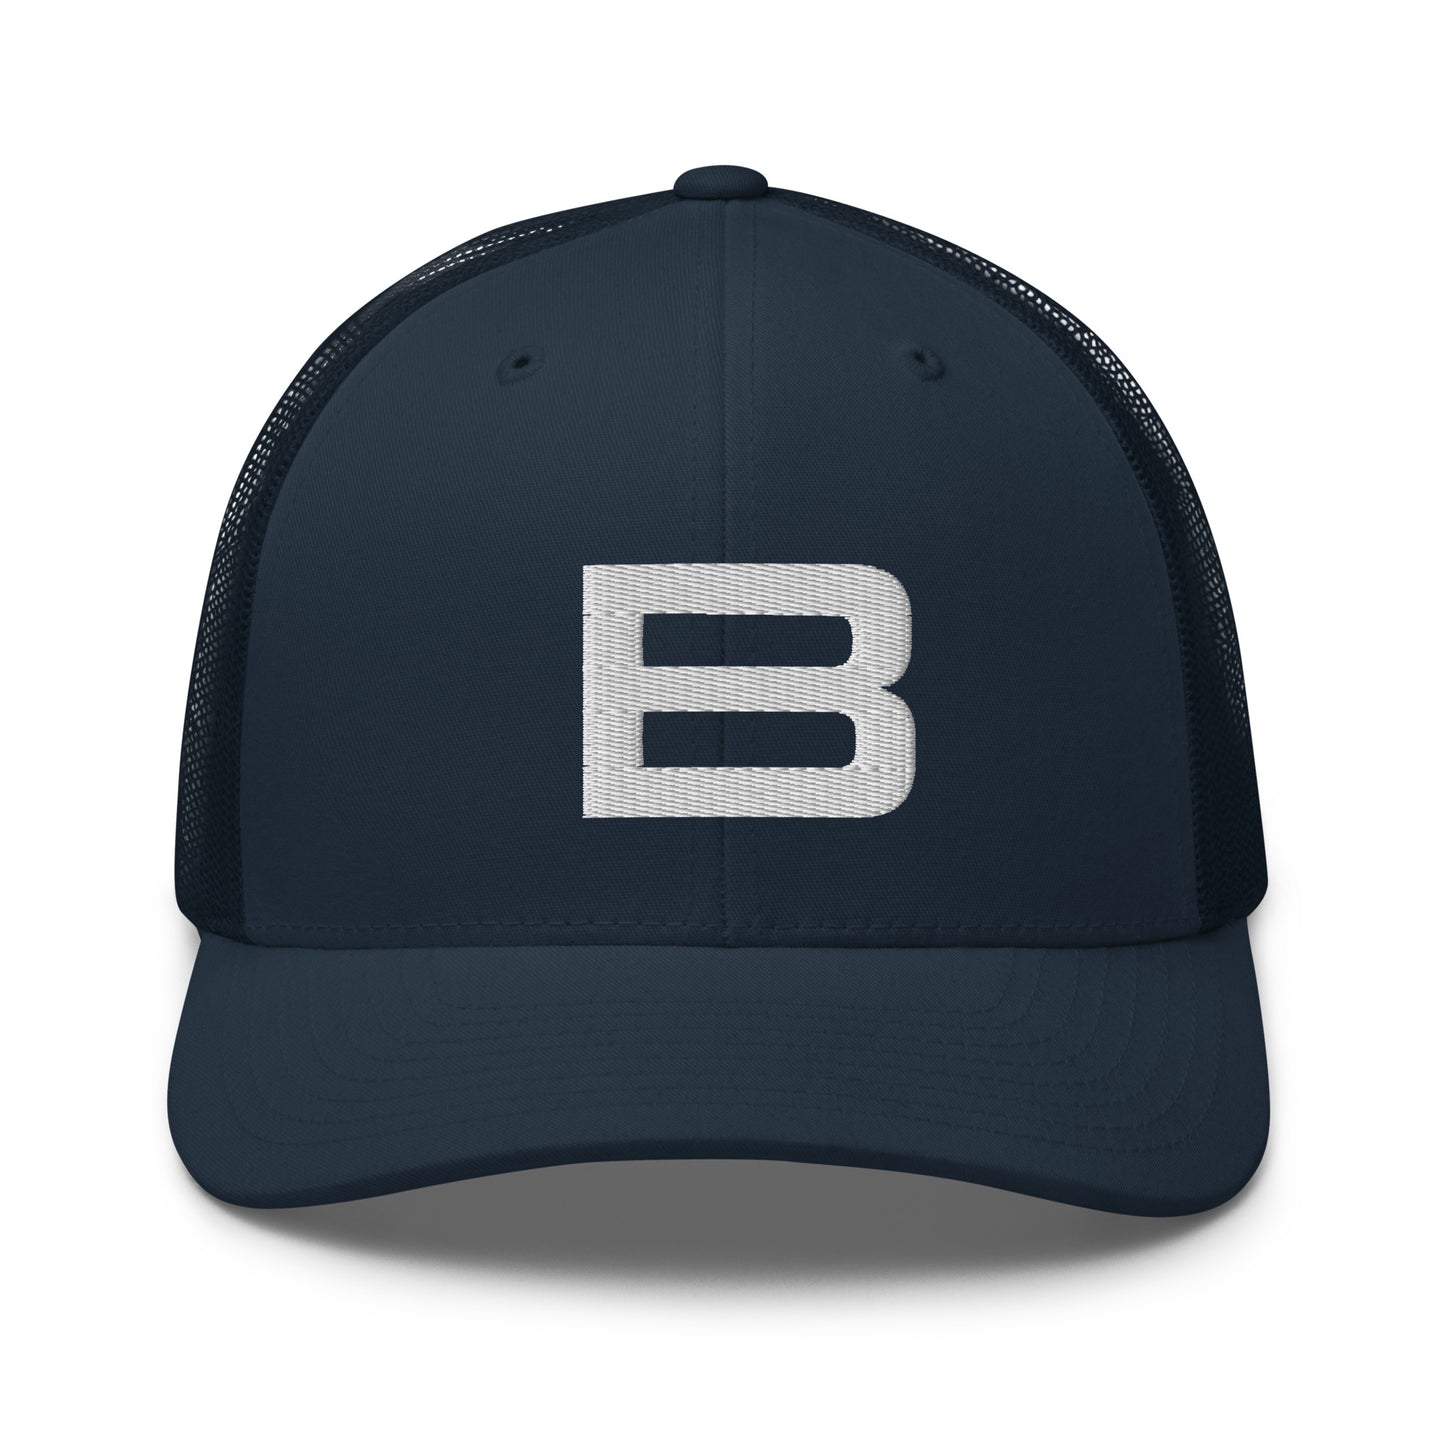 BALA "B" Trucker Hat